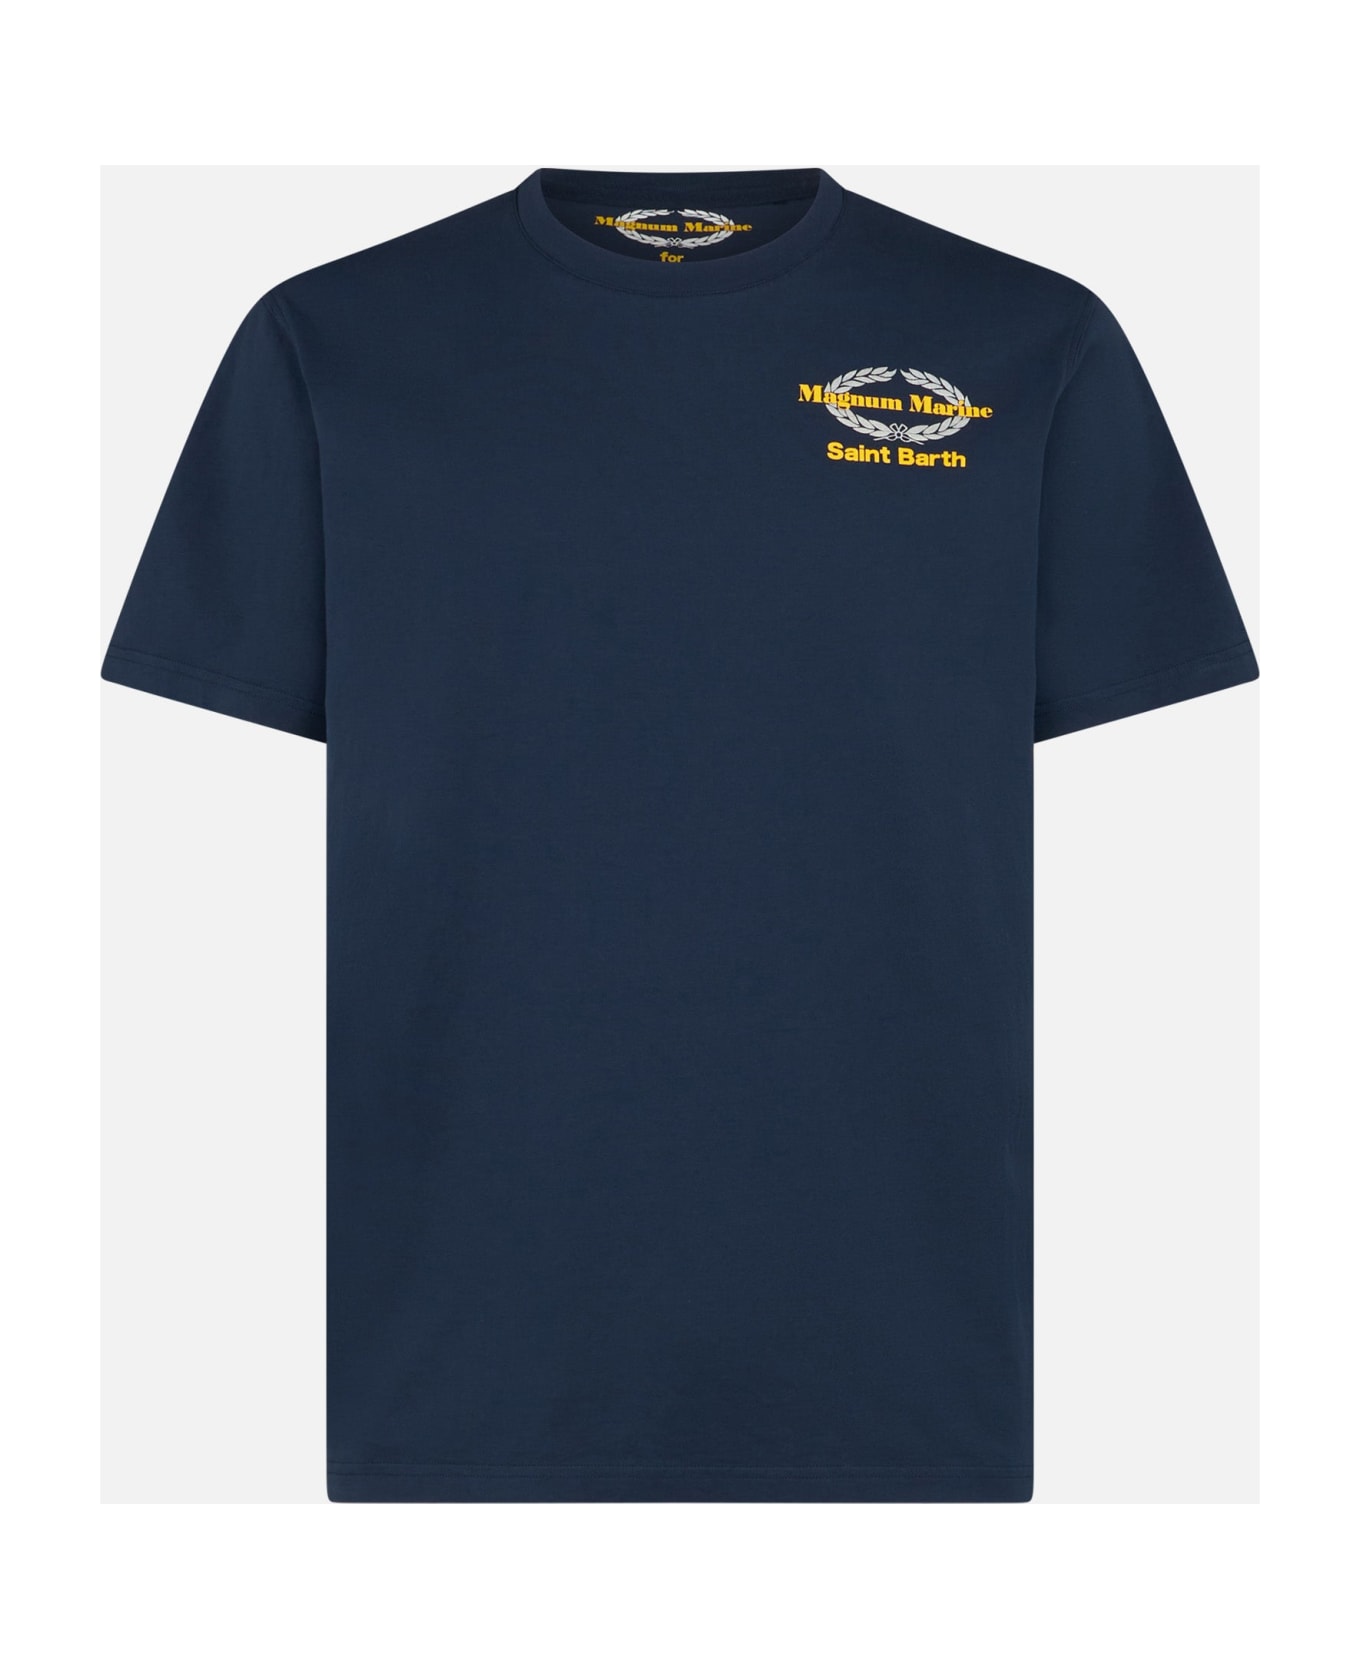 MC2 Saint Barth Man Cotton T-shirt With Magnum Marine Print | Magnum Marine Special Edition - BLUE